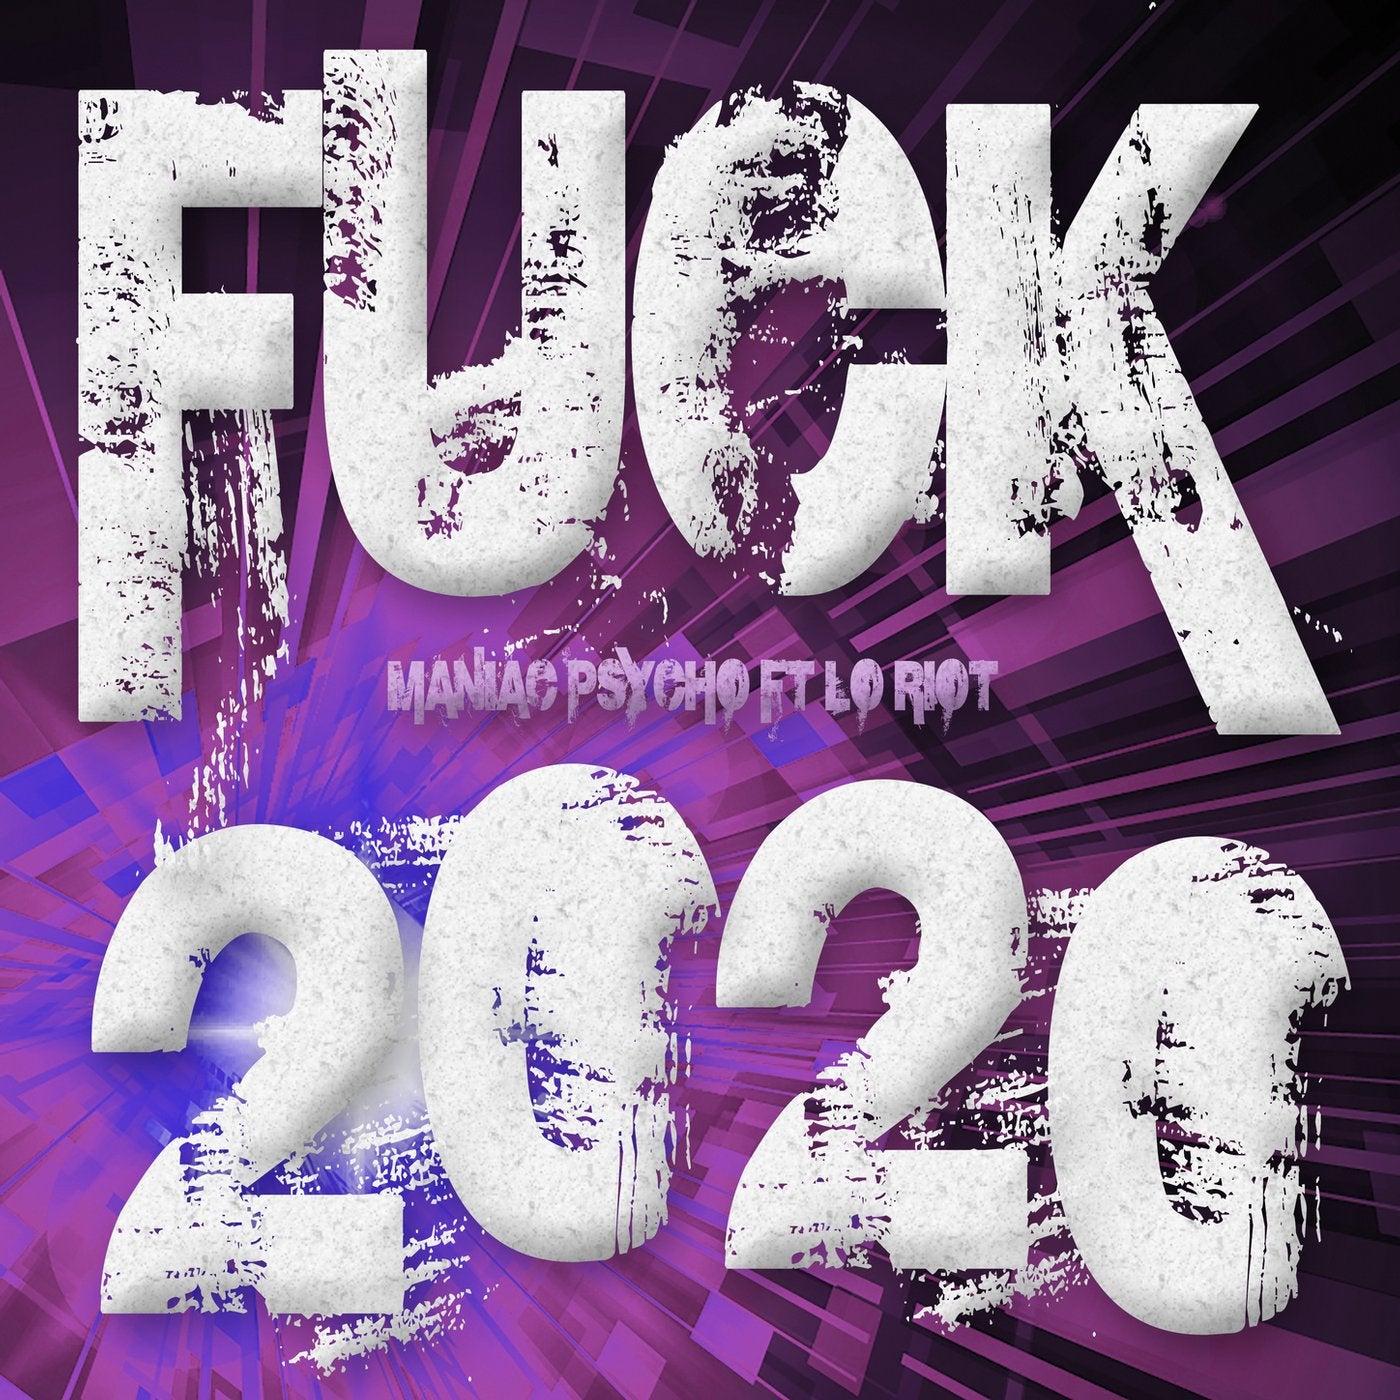 Fuck 2020